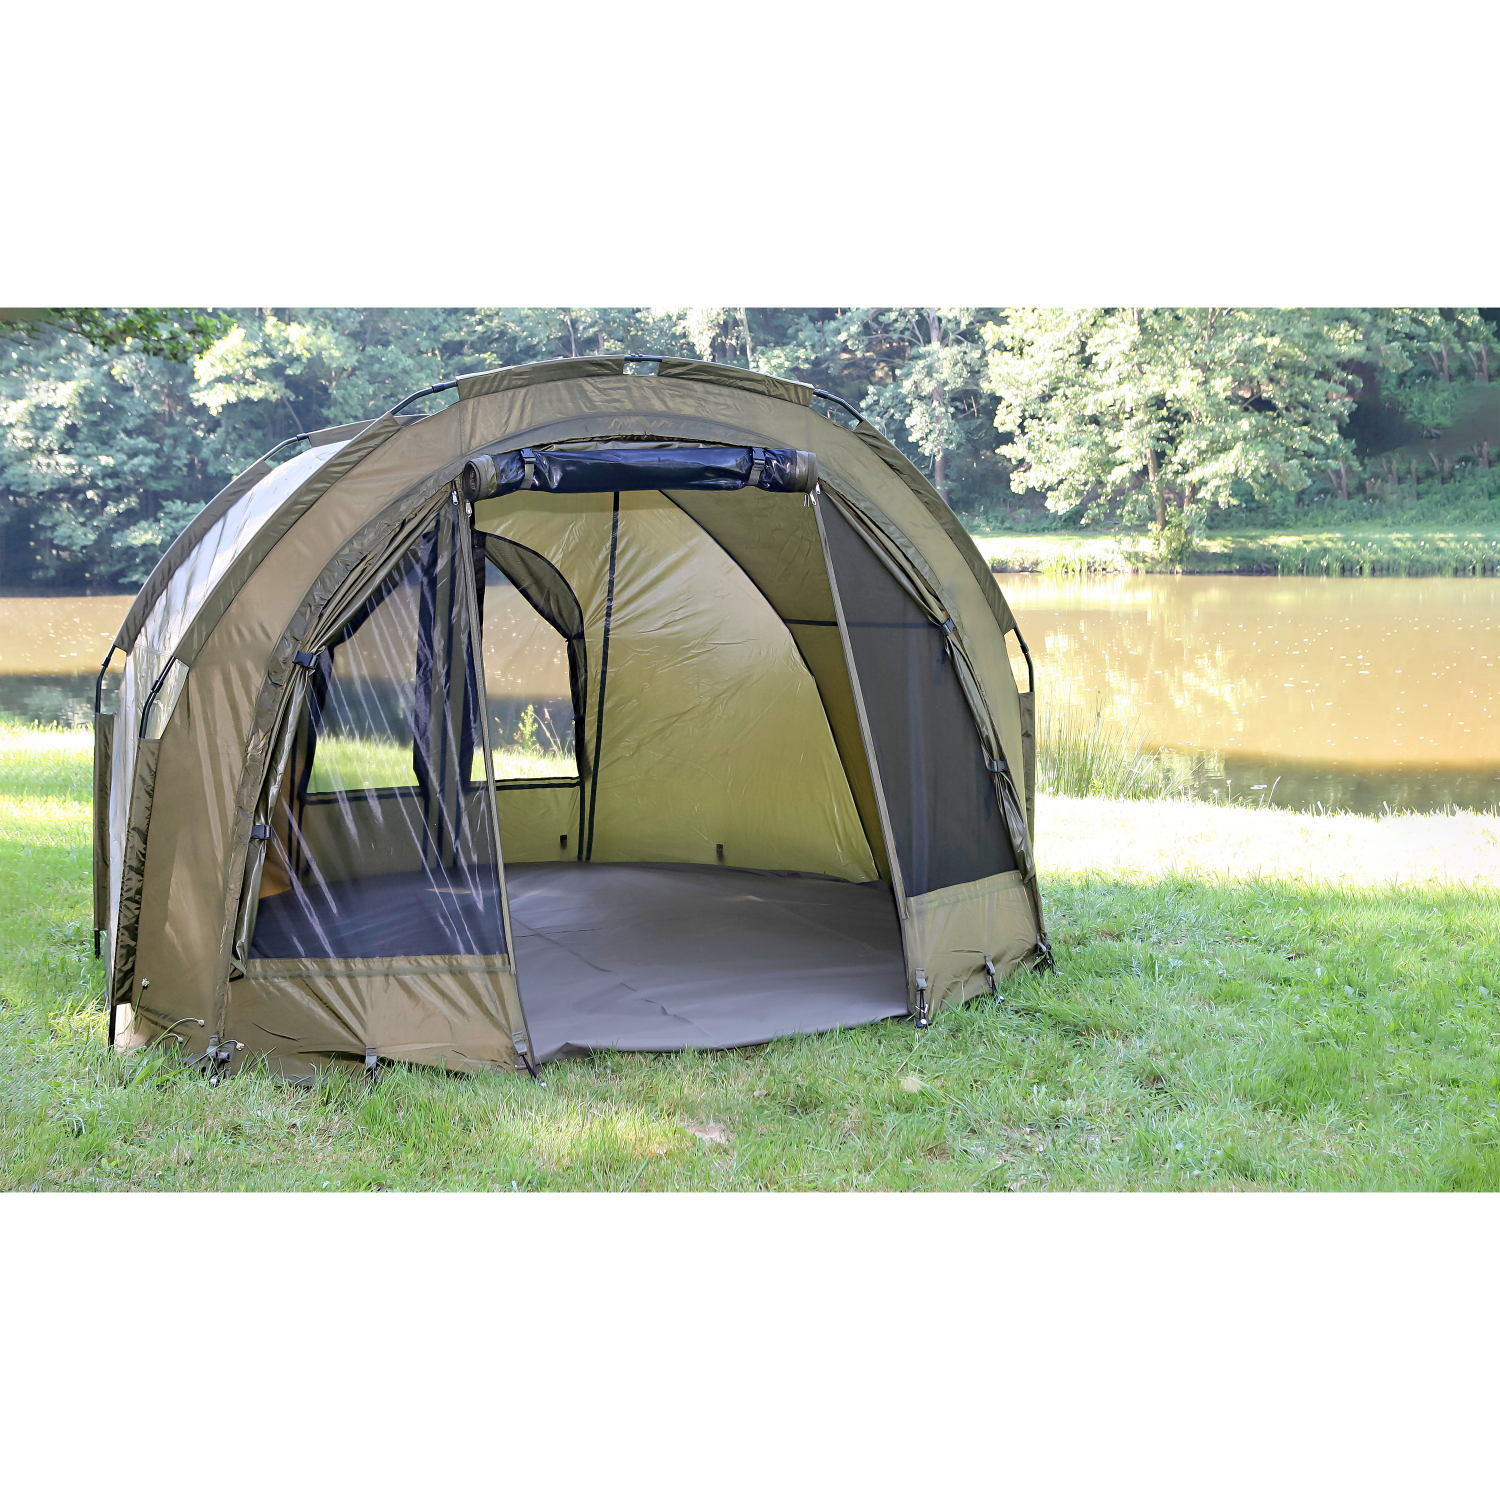 Anaconda 2-Man-Tent Cusky Dome 190 